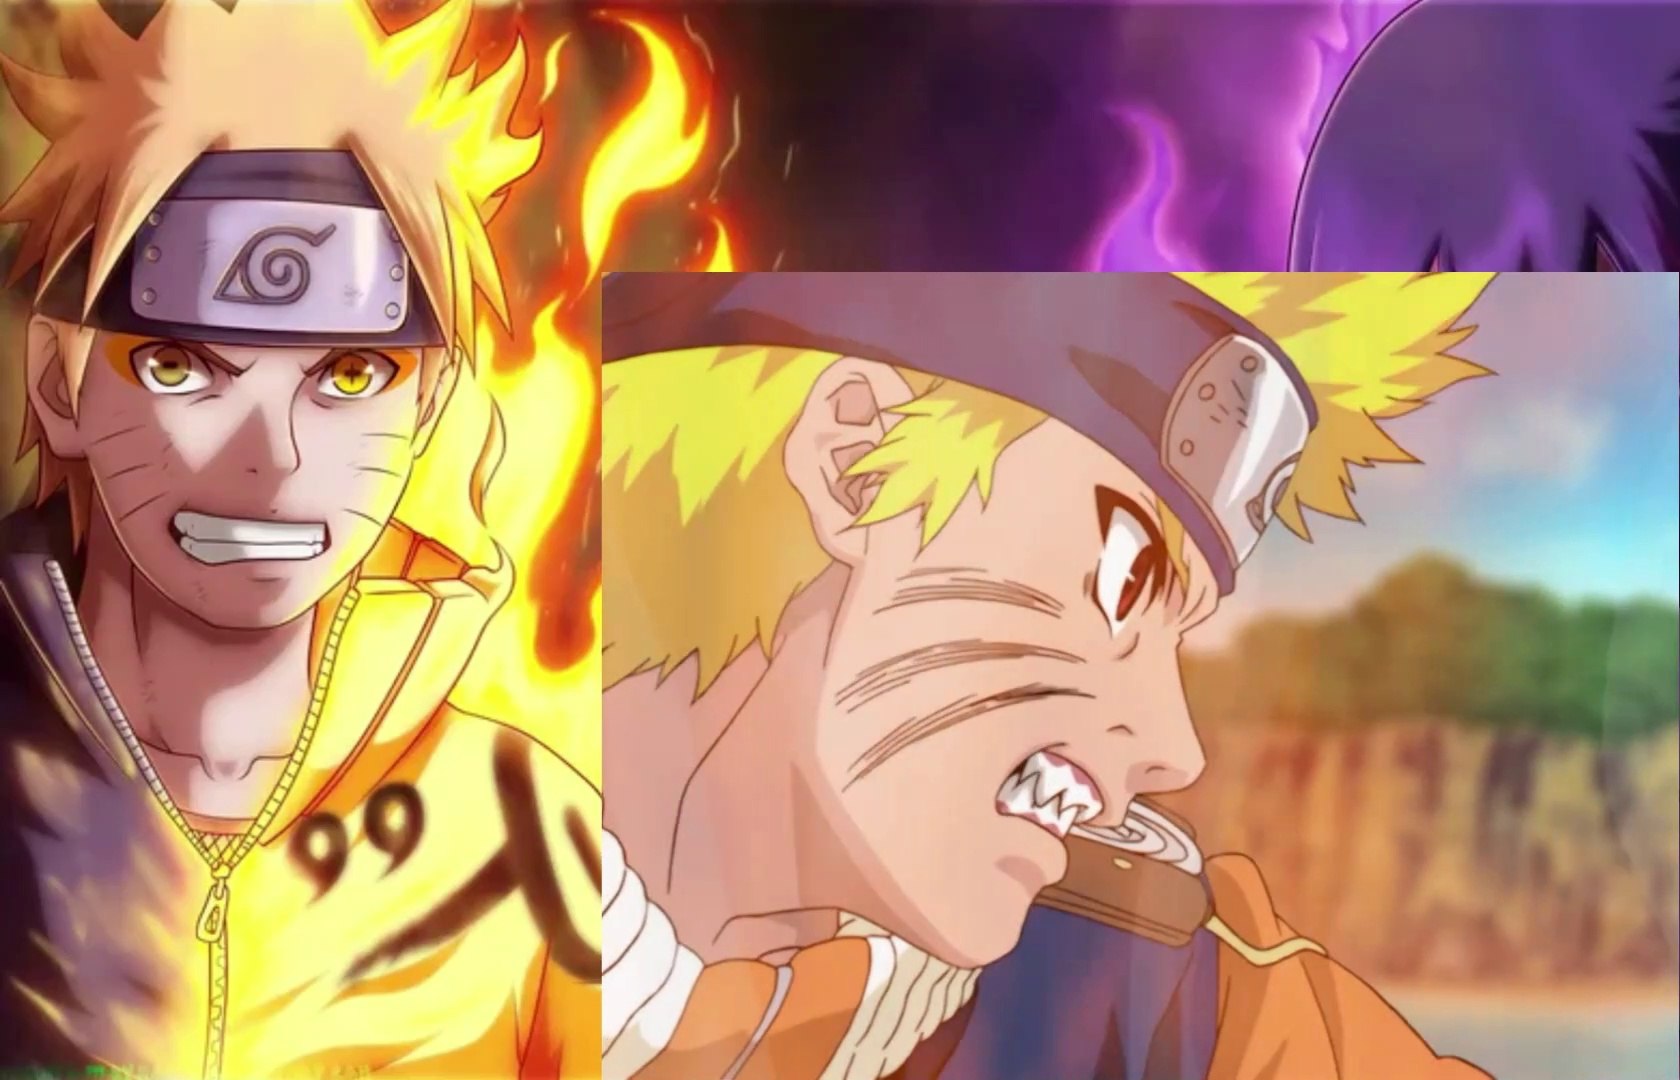 Naruto Season 7 The Treasure Hunt is On! - Watch on Crunchyroll